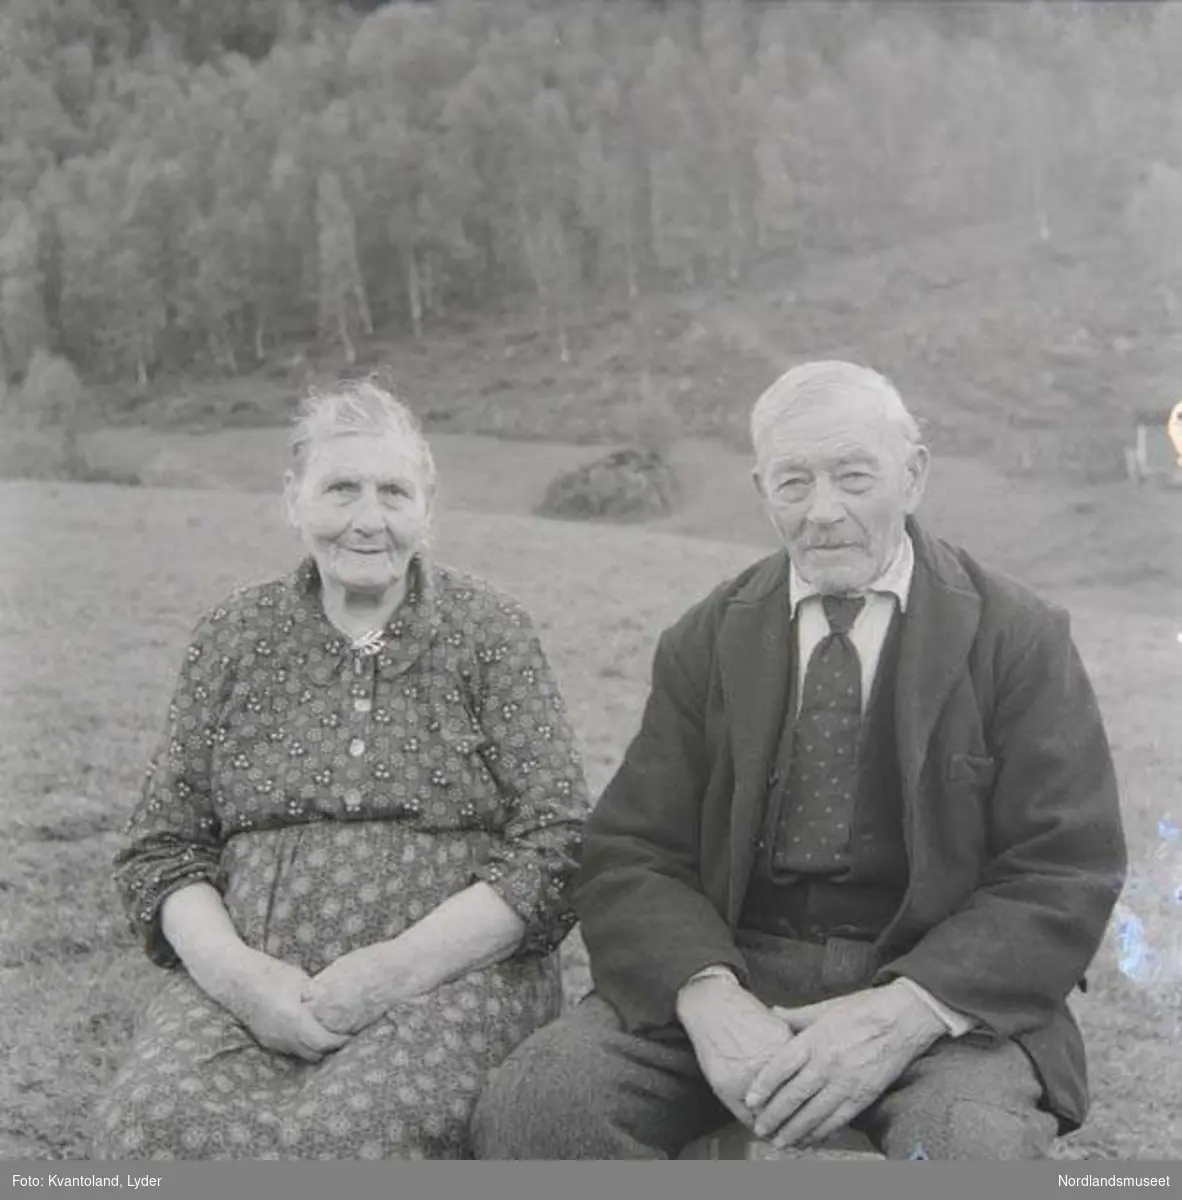 Kvantolands protokoll: Kristianna og Edvin Johansen, Aspfjord